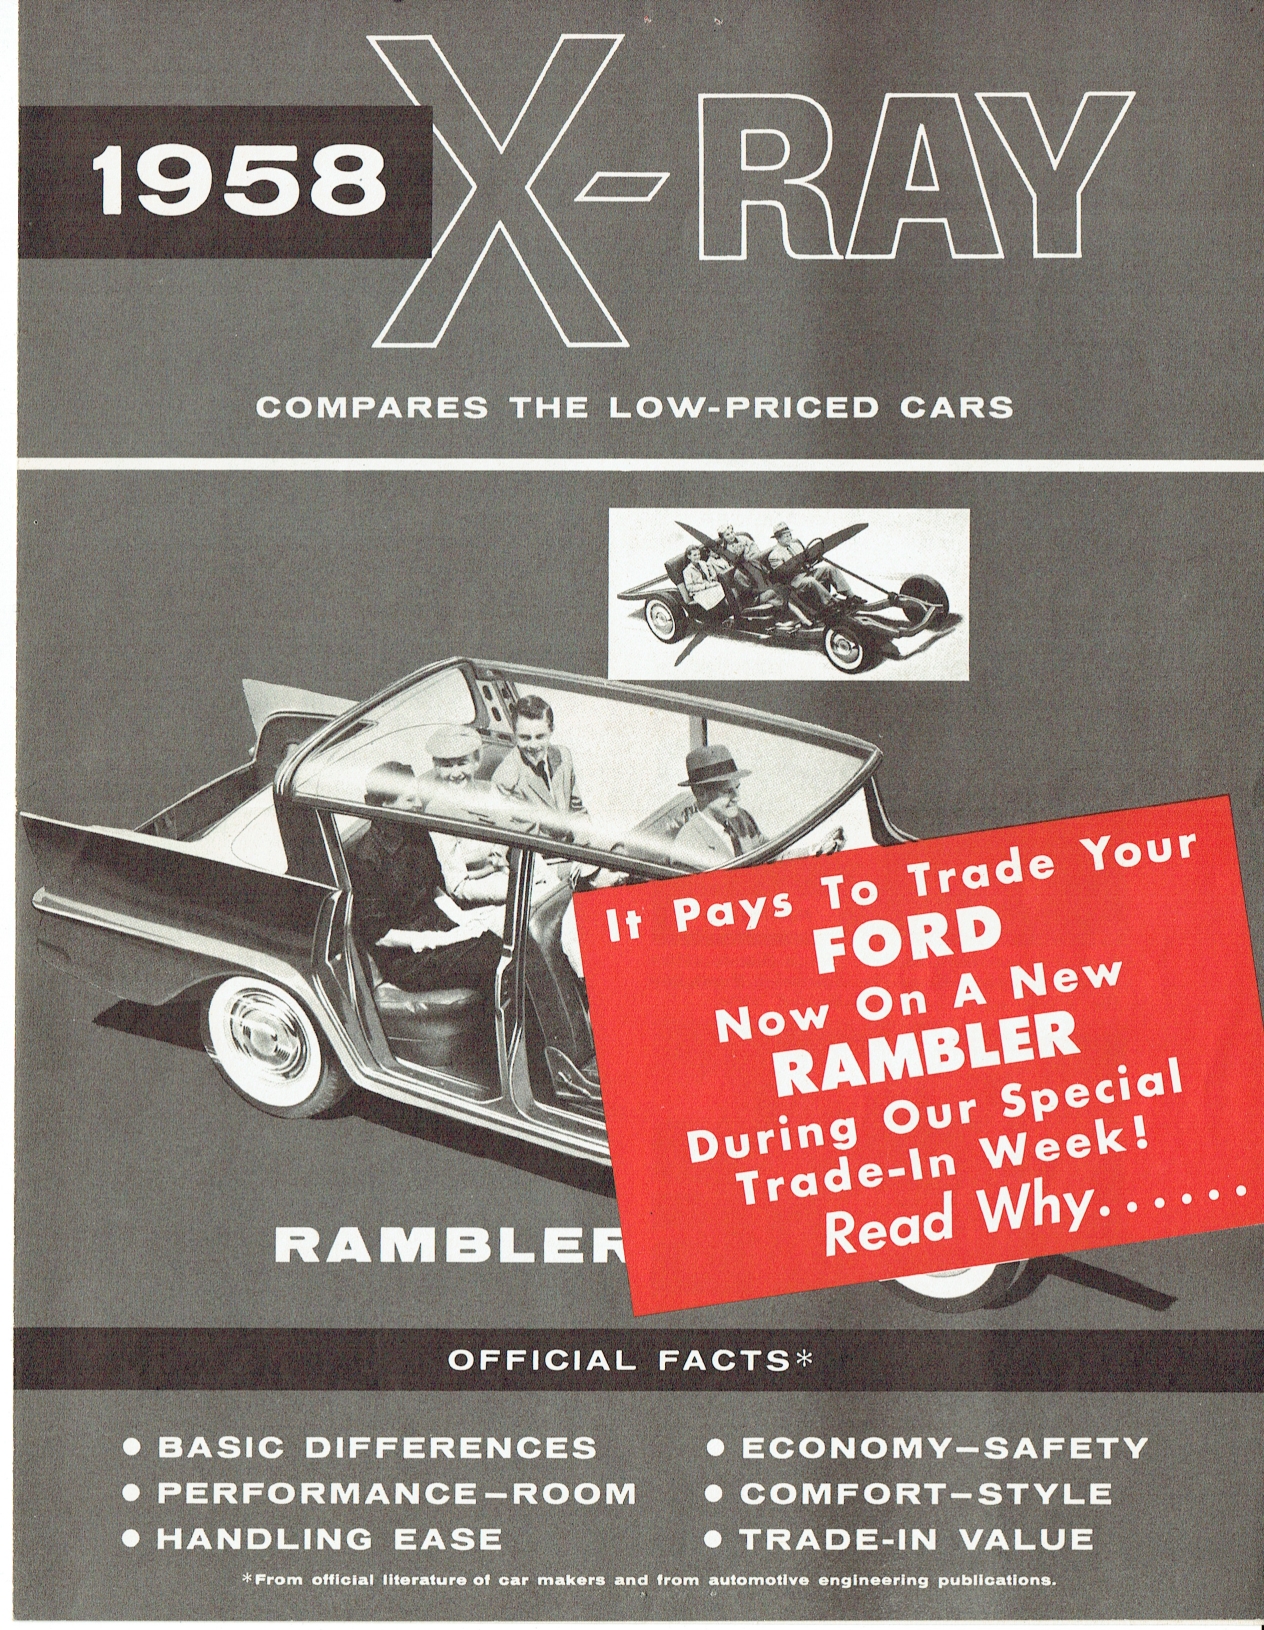 1958_Rambler_vs_Ford_X-Ray_Mailer-01